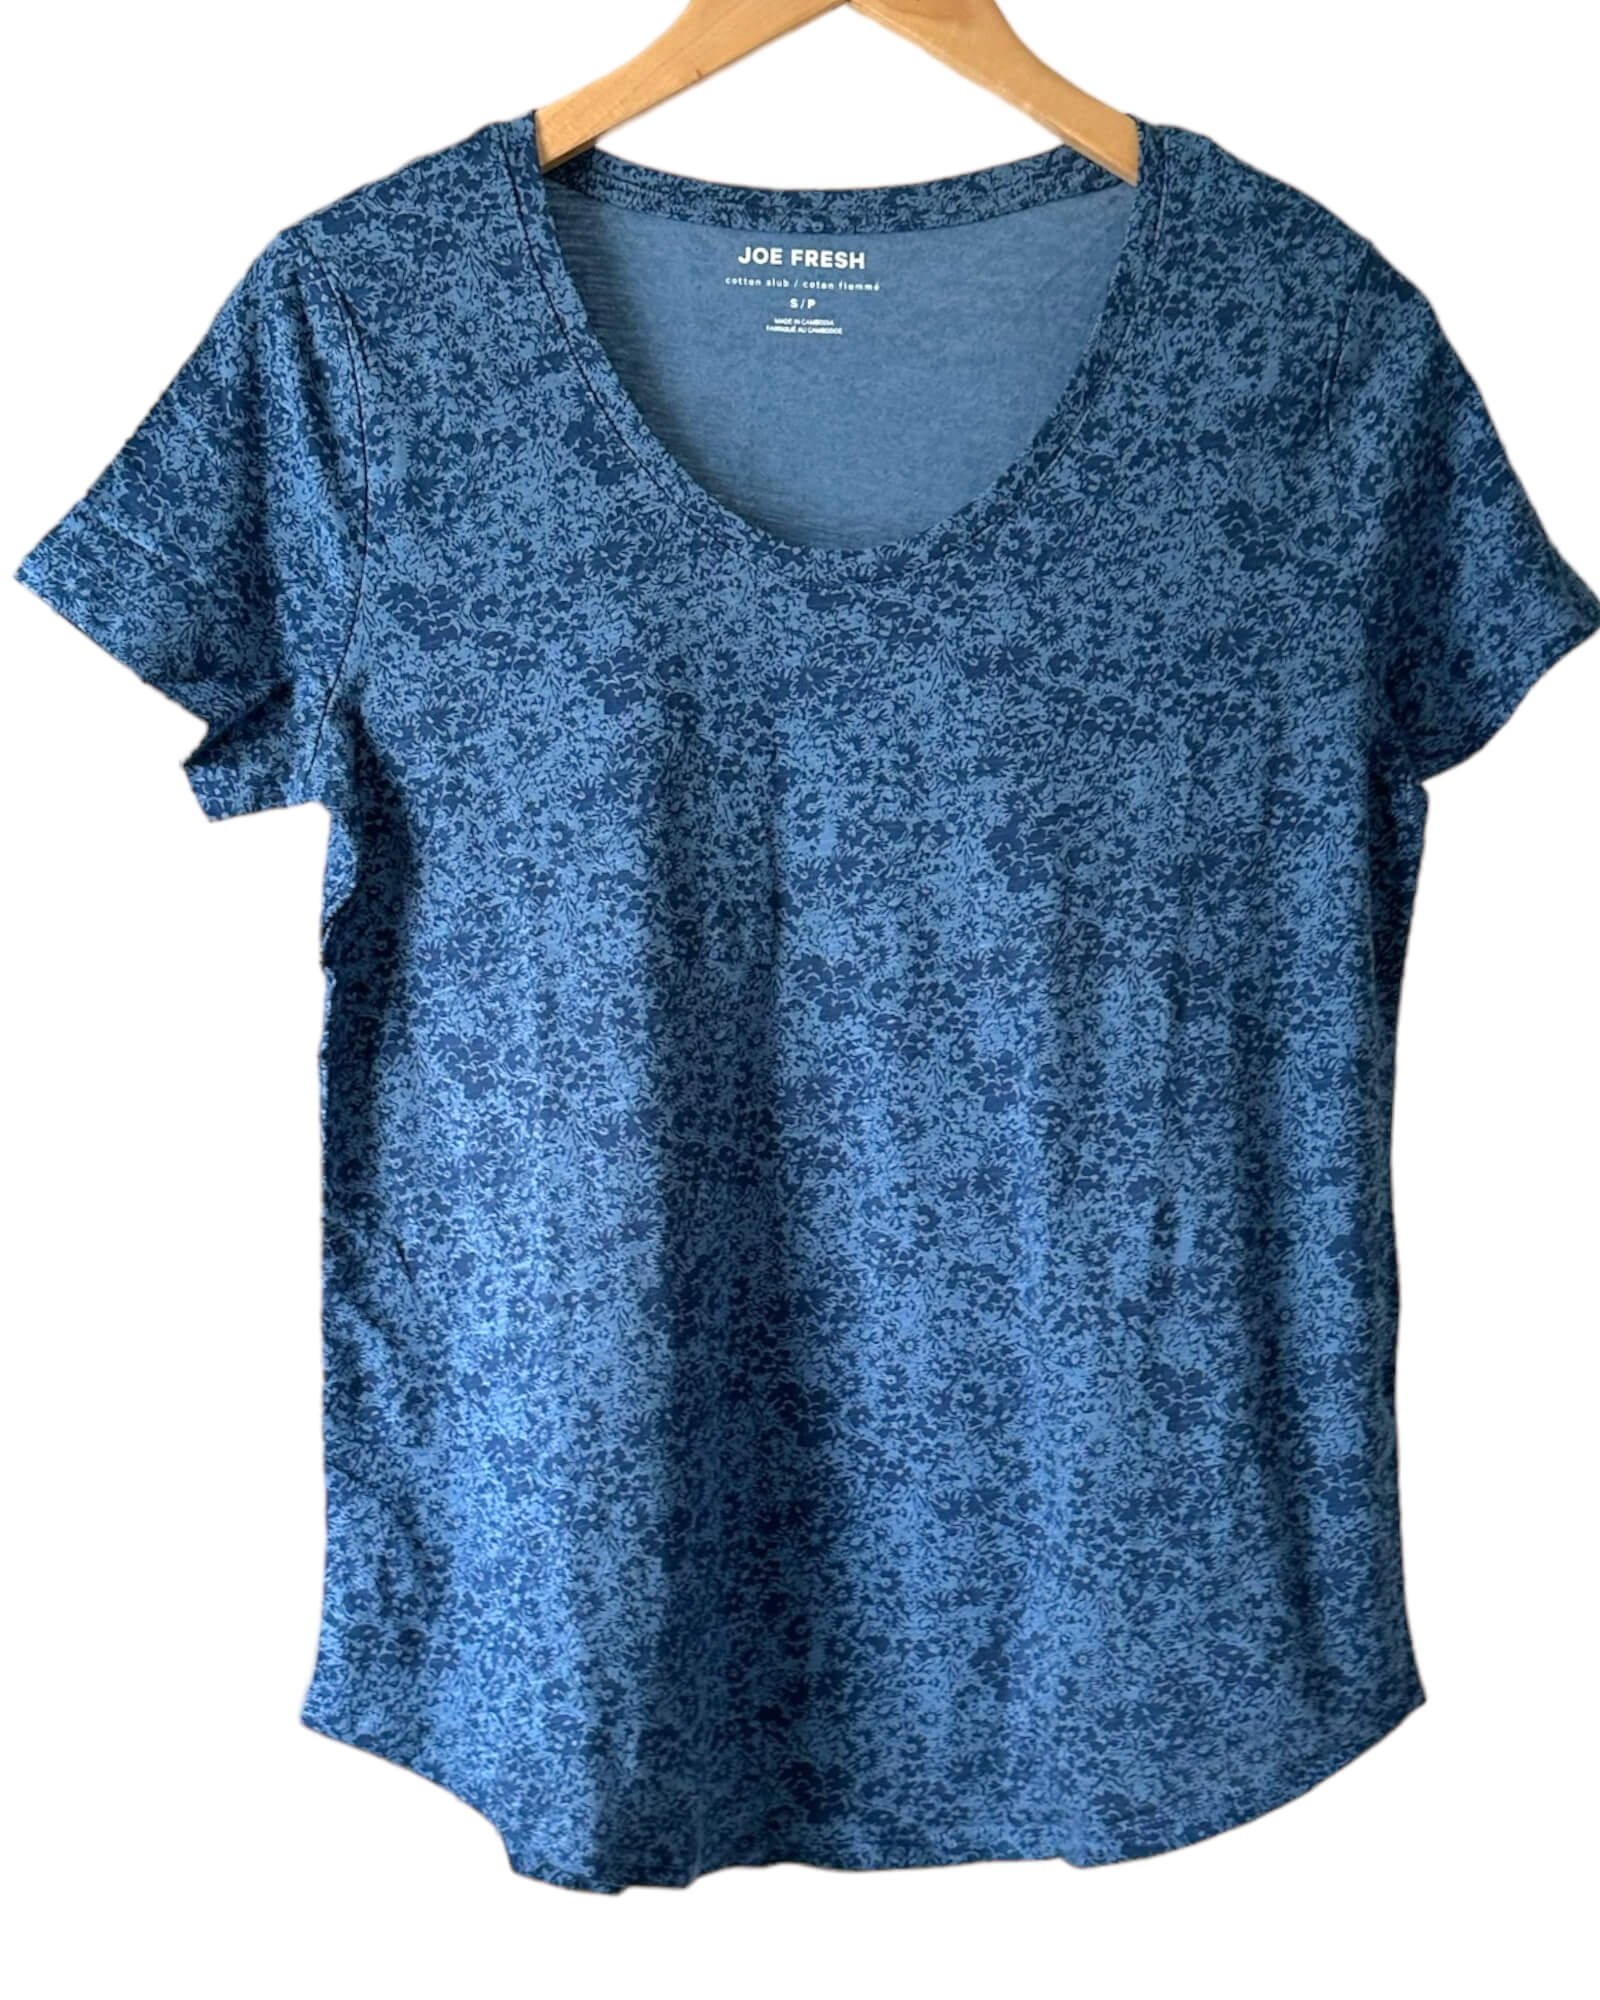 Soft Summer JOE FRESH blue floral slub tee t-shirt